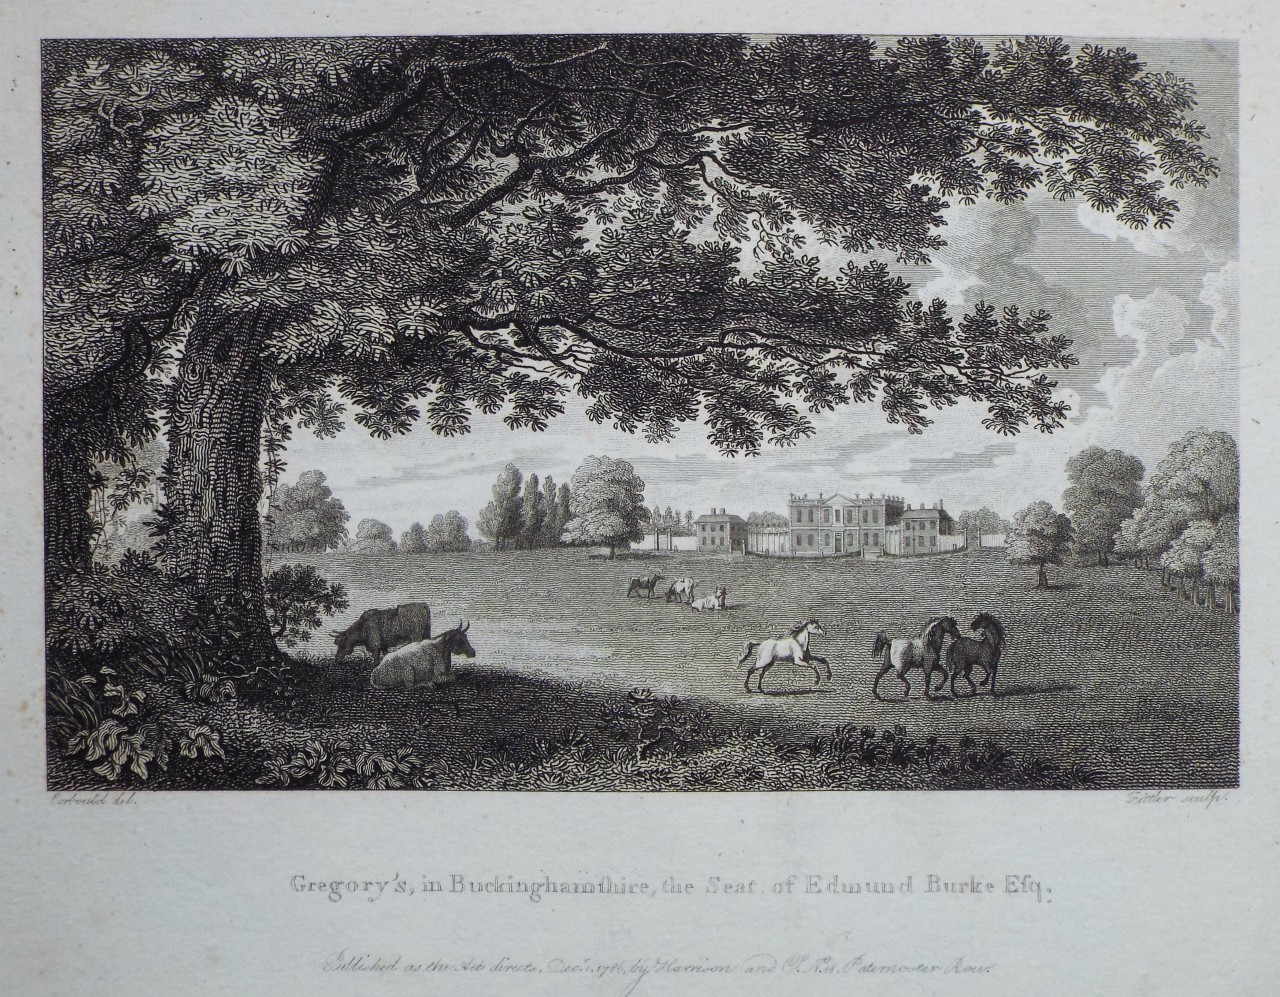 Print - Gregory's, in Buckinghamshire, the Seat of Edmund Burke Esq. - 